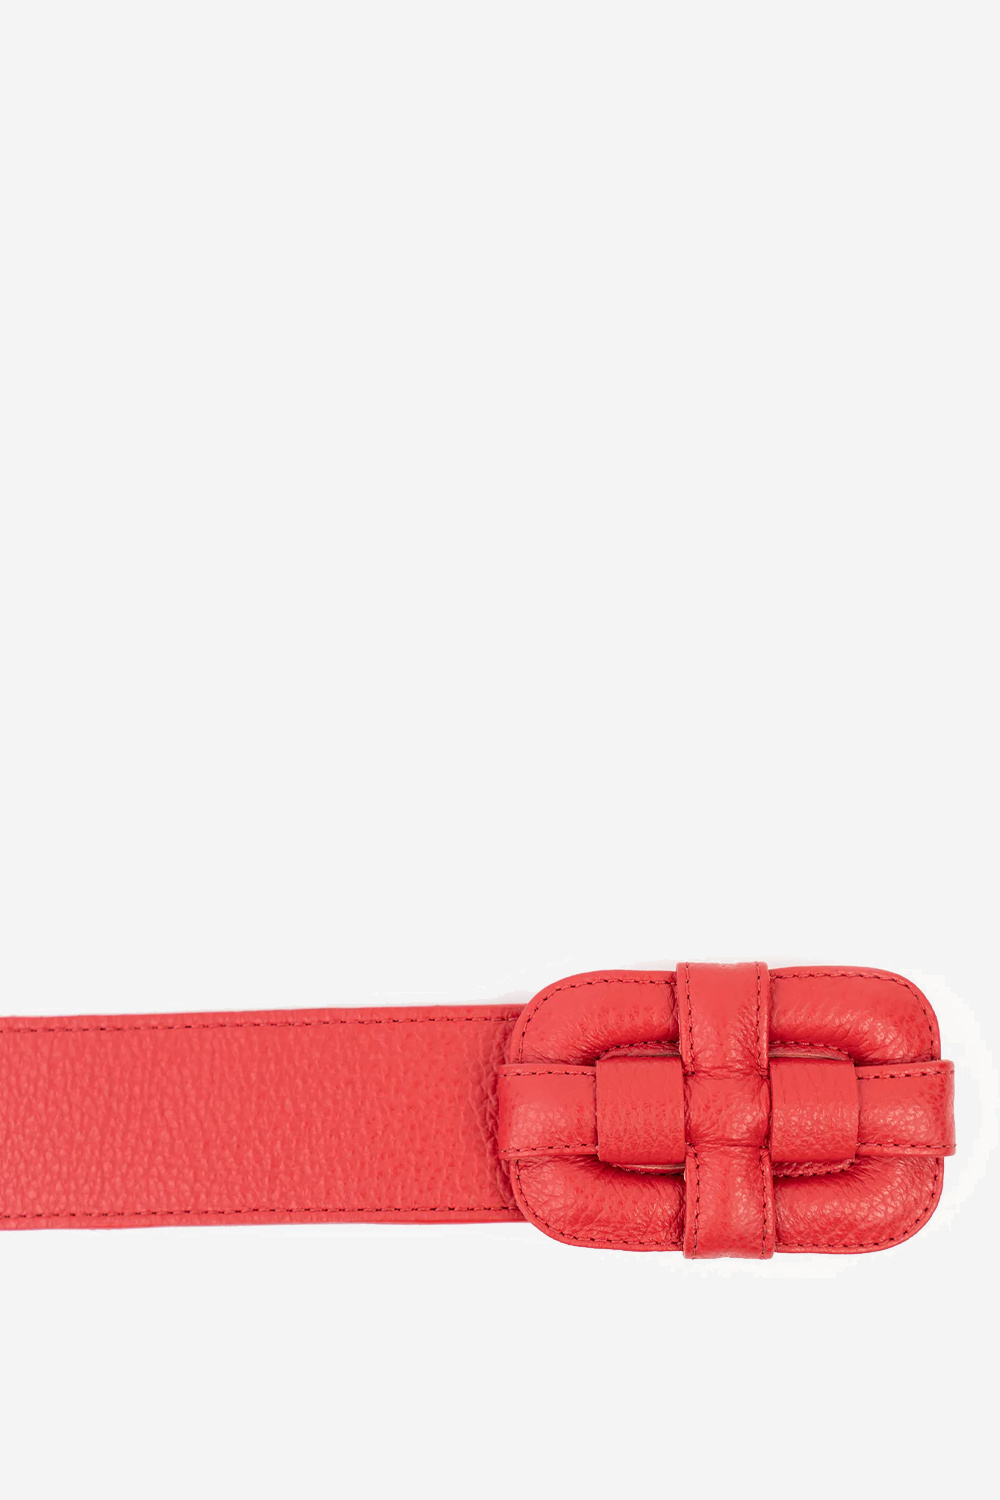 Morobe Belts Red